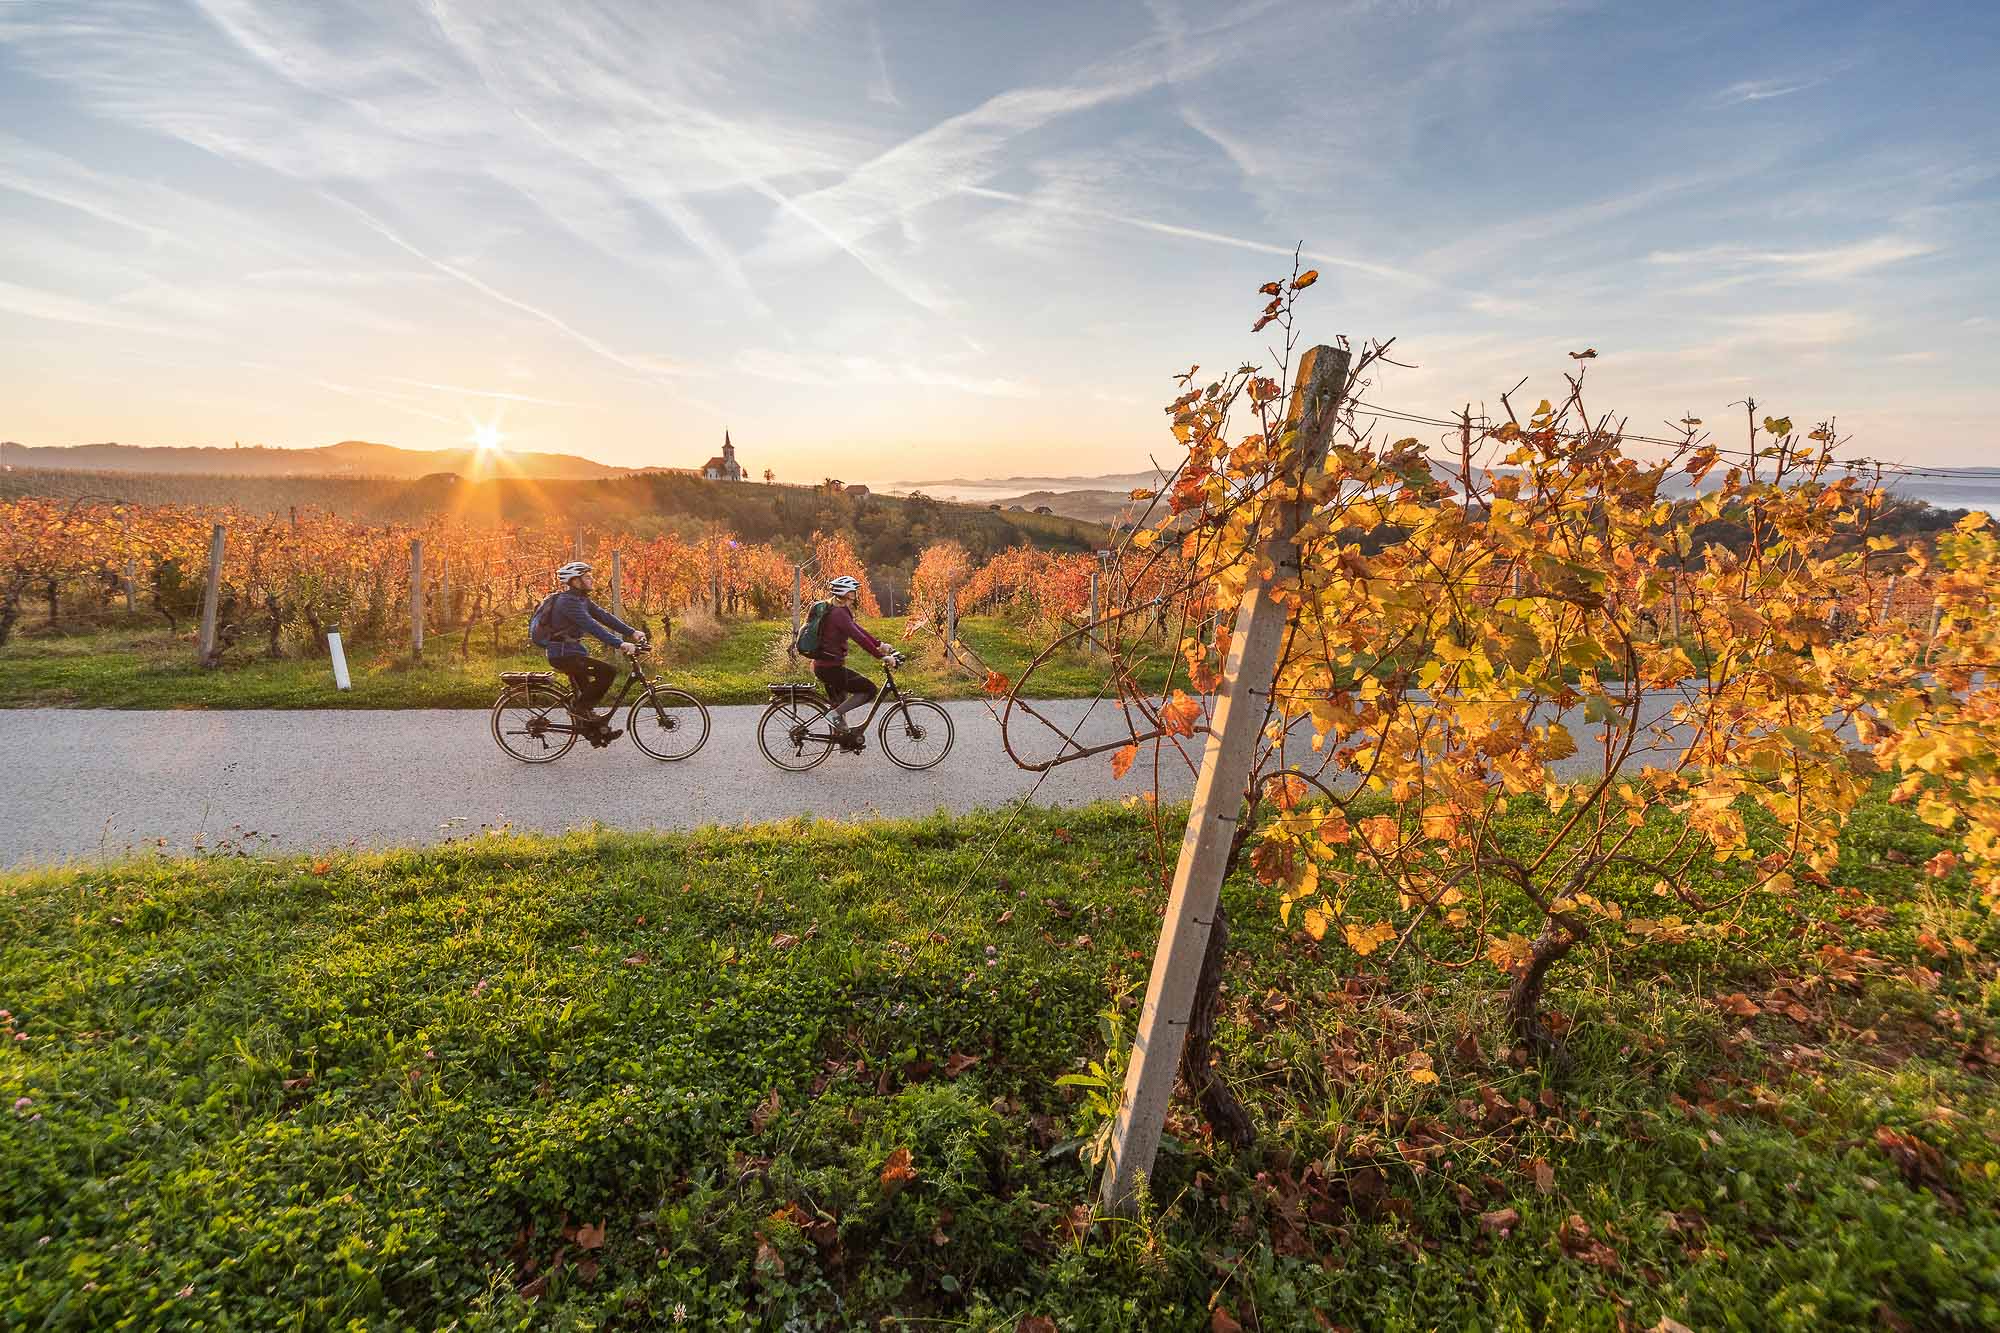 Bikers on an autumn sunset biking trip through the reddish vineyards in Bela Krajina.